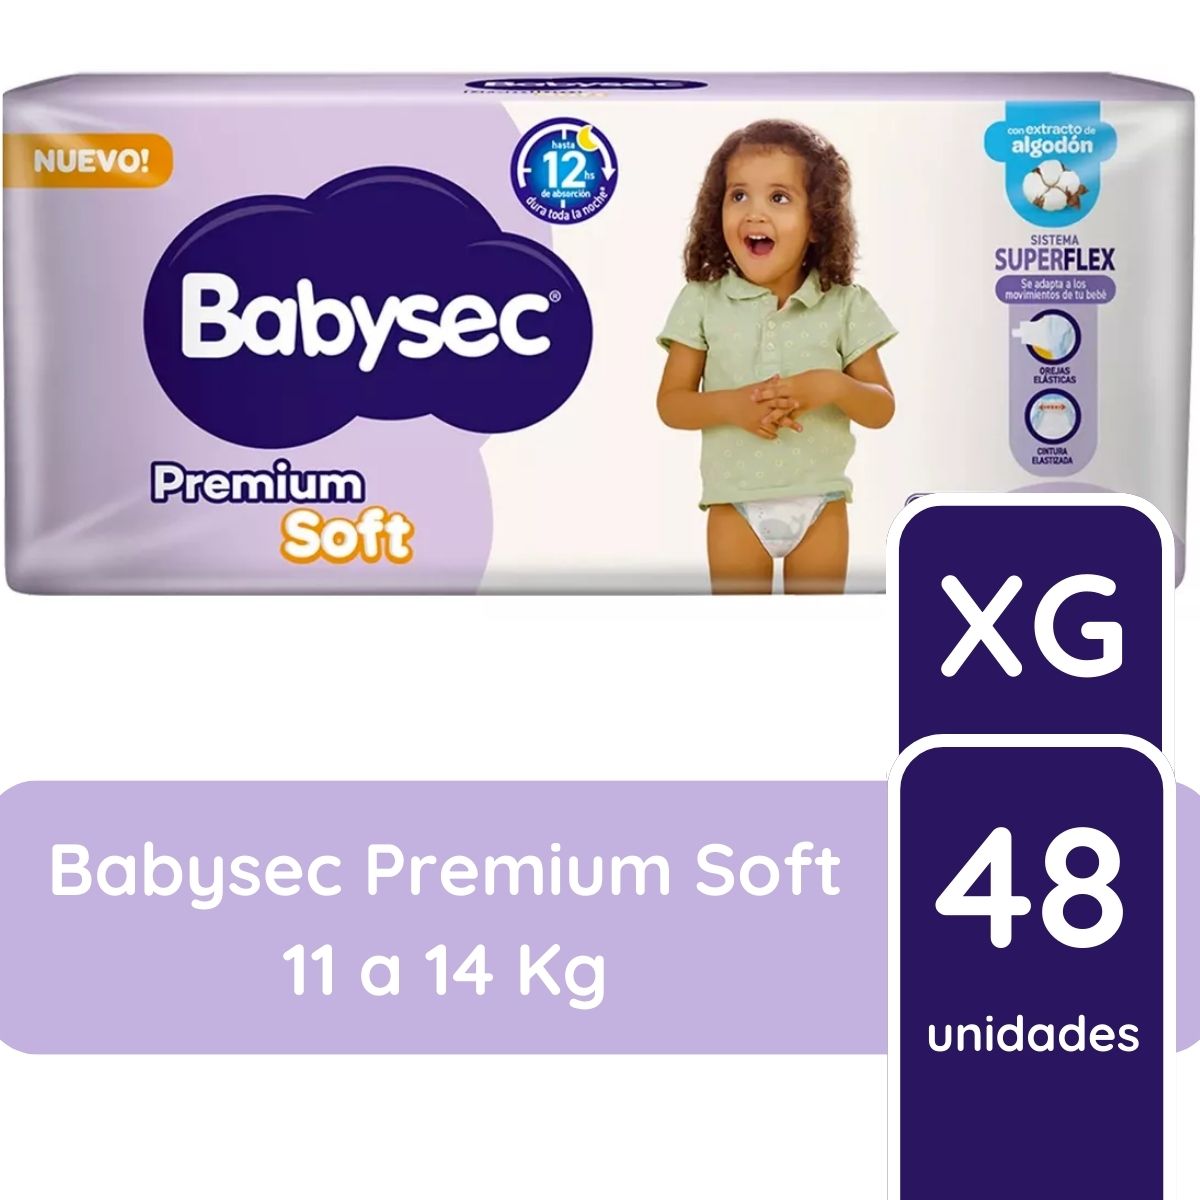 Imagen 1 de 2 de Pañales Babysec Premium Soft XG x 48 unidades